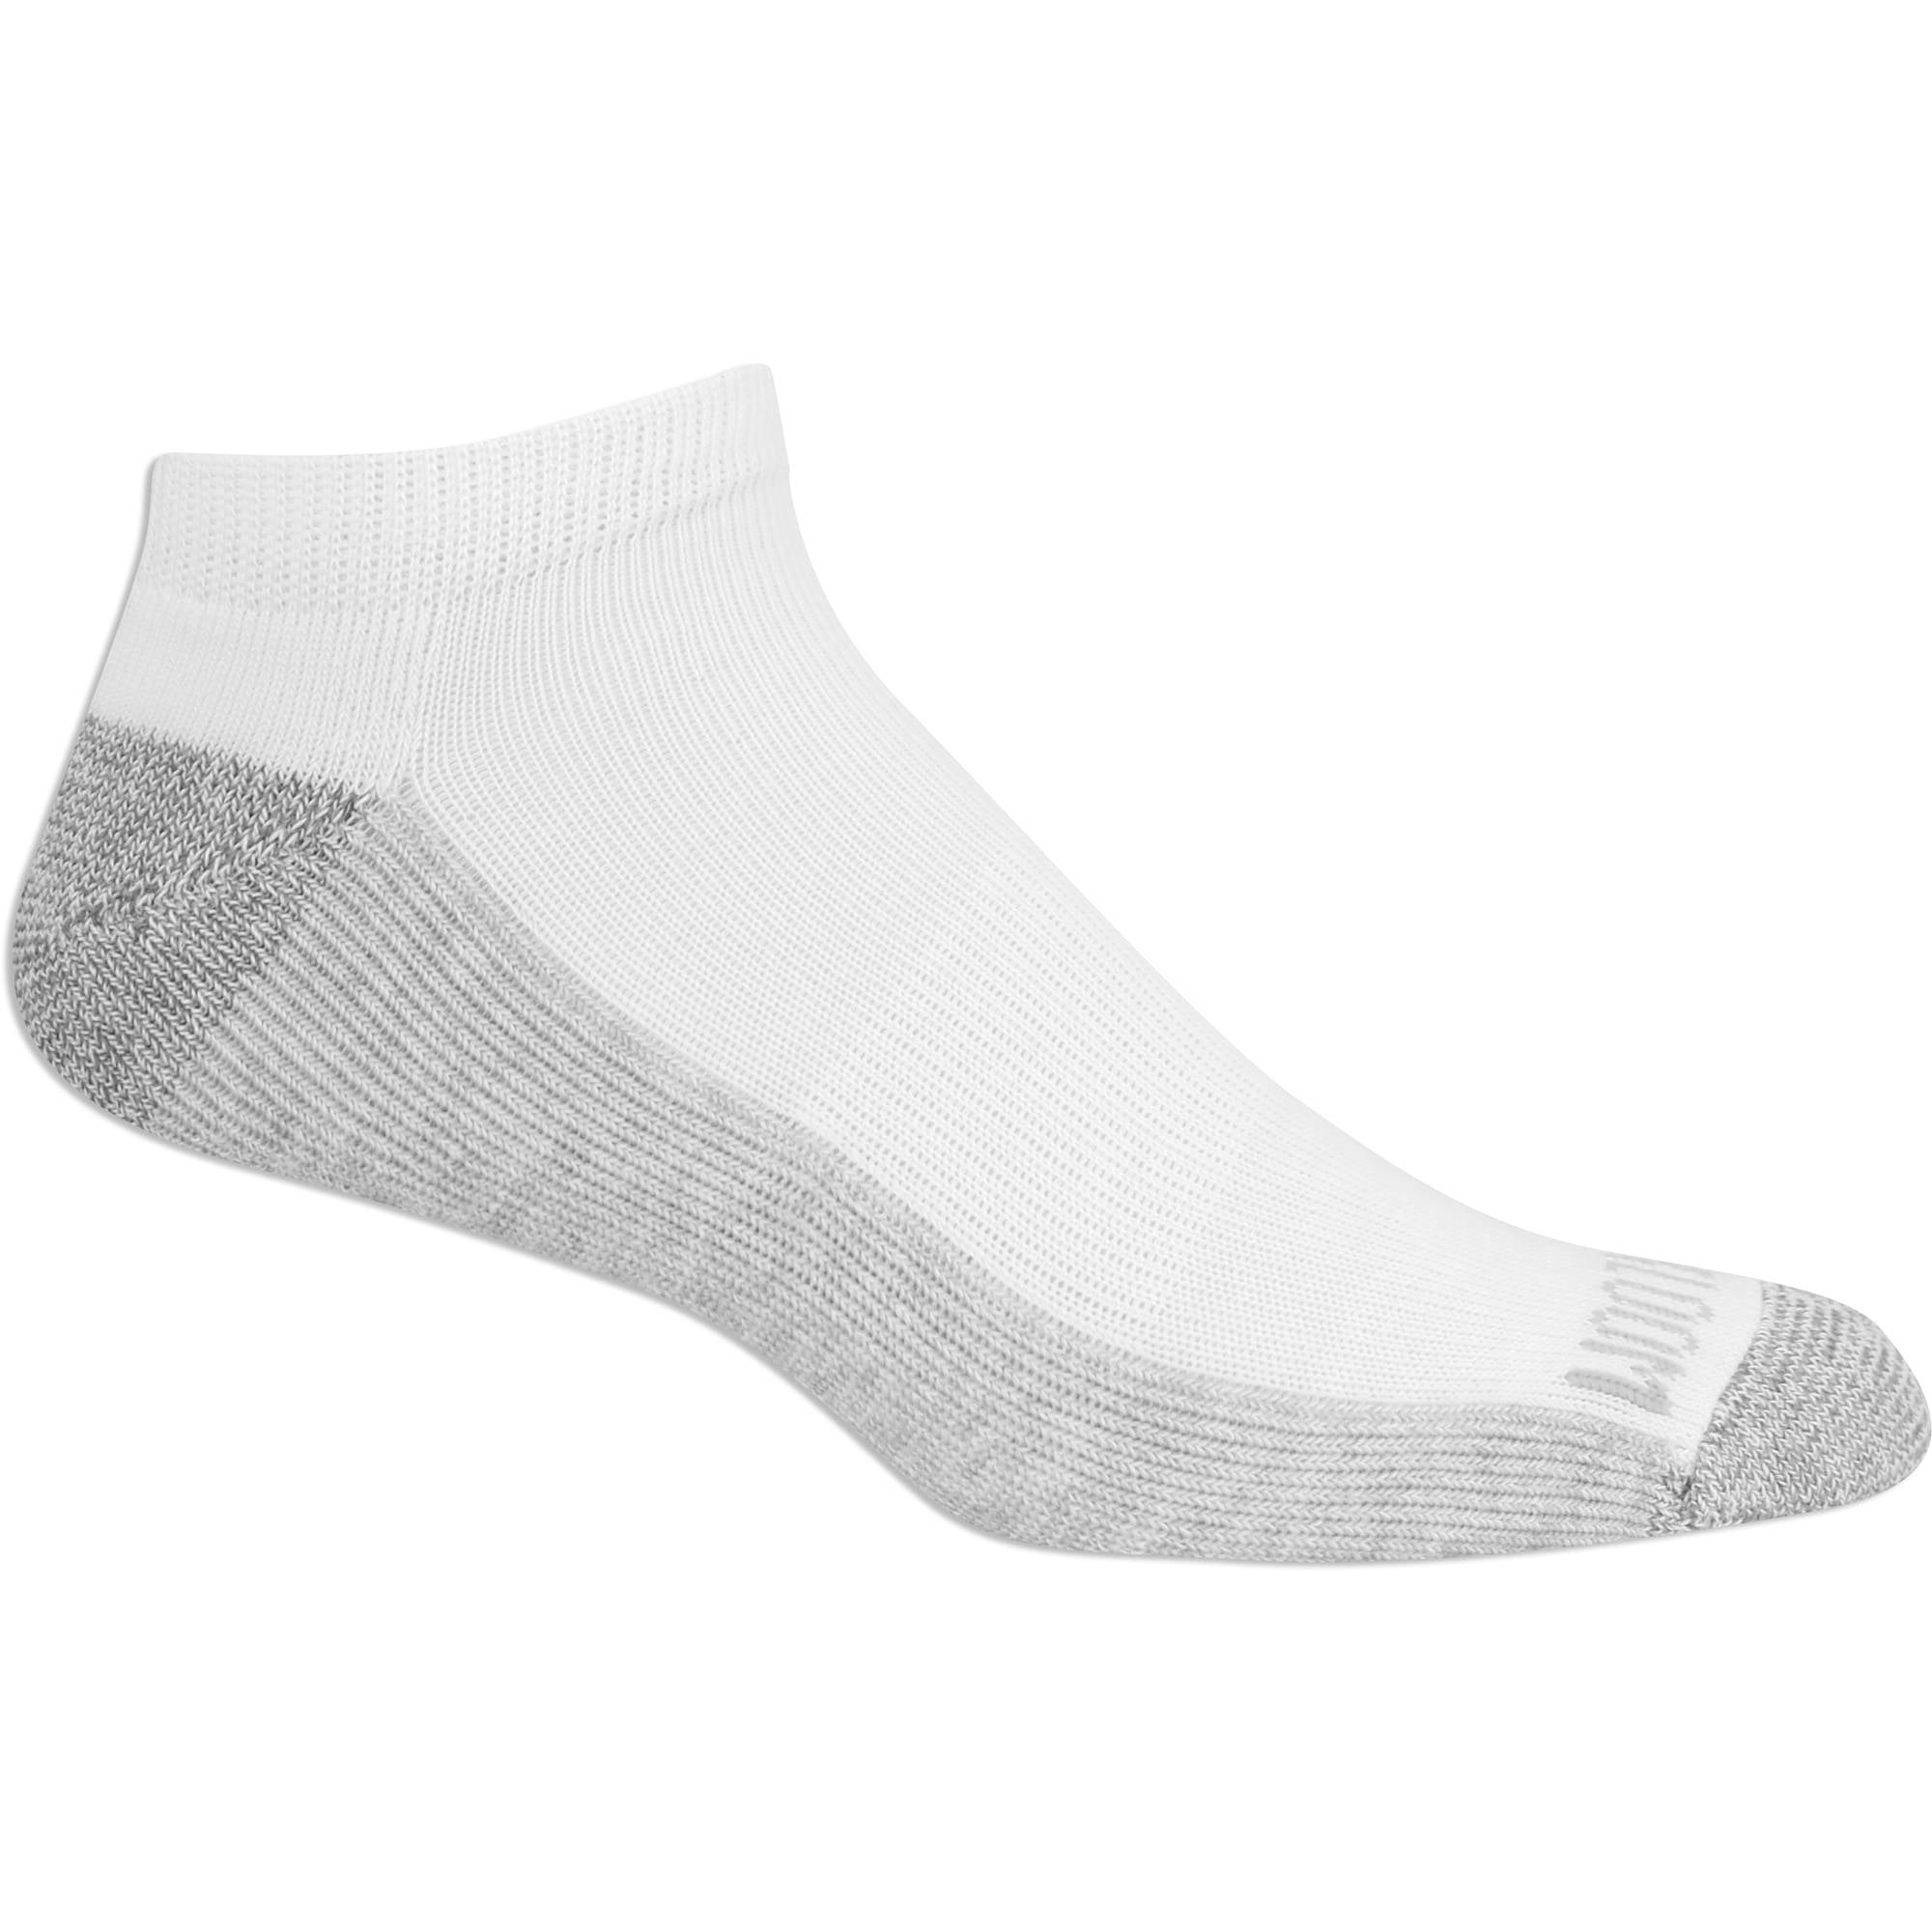 Mens Low Cut Socks 6 Pack - Walmart.com